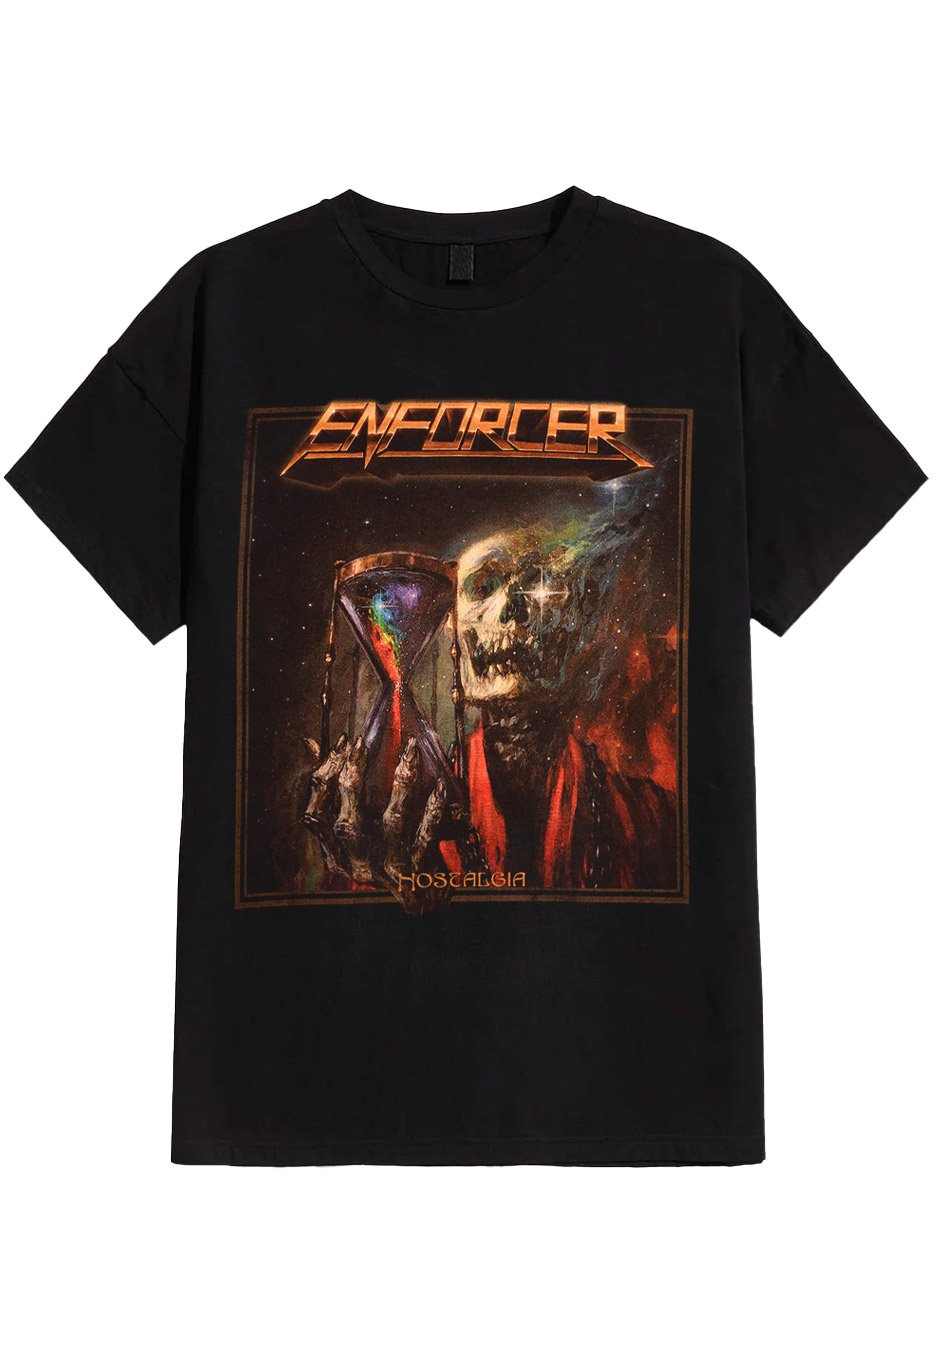 Enforcer - Cover Nostalgia - T-Shirt